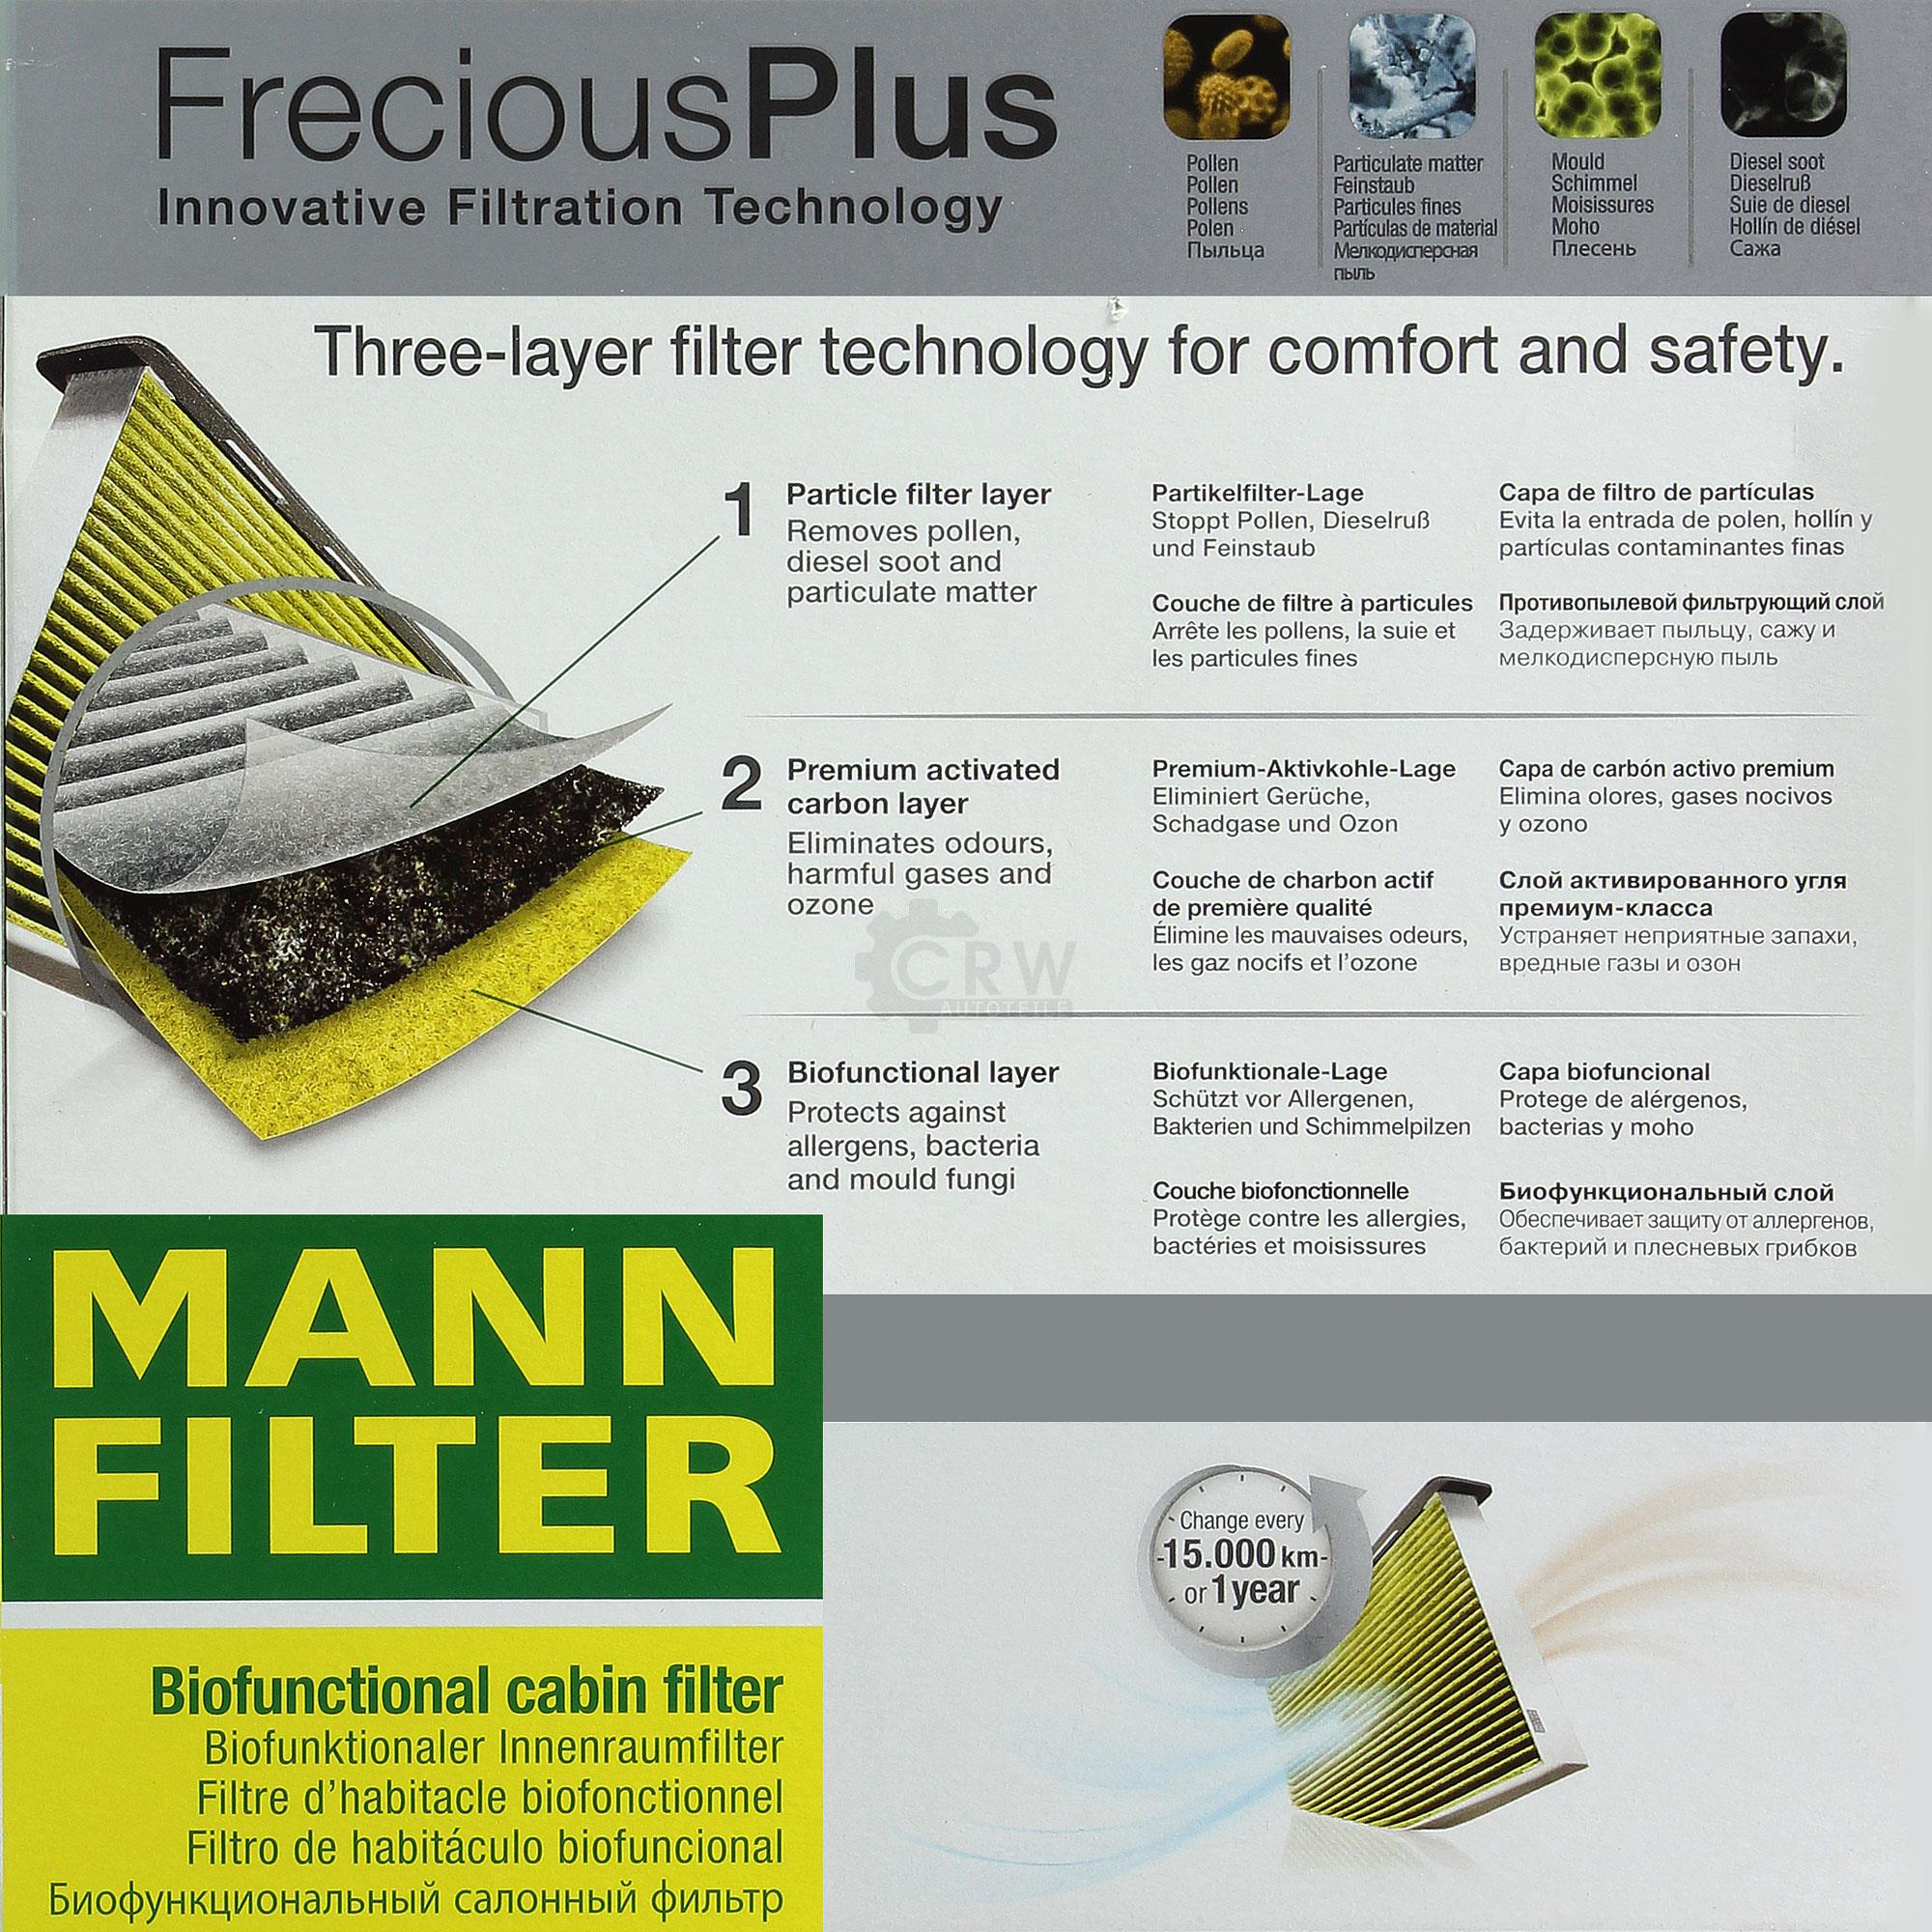 MANN-Filter Innenraumfilter Biofunctional für Allergiker FP 2742